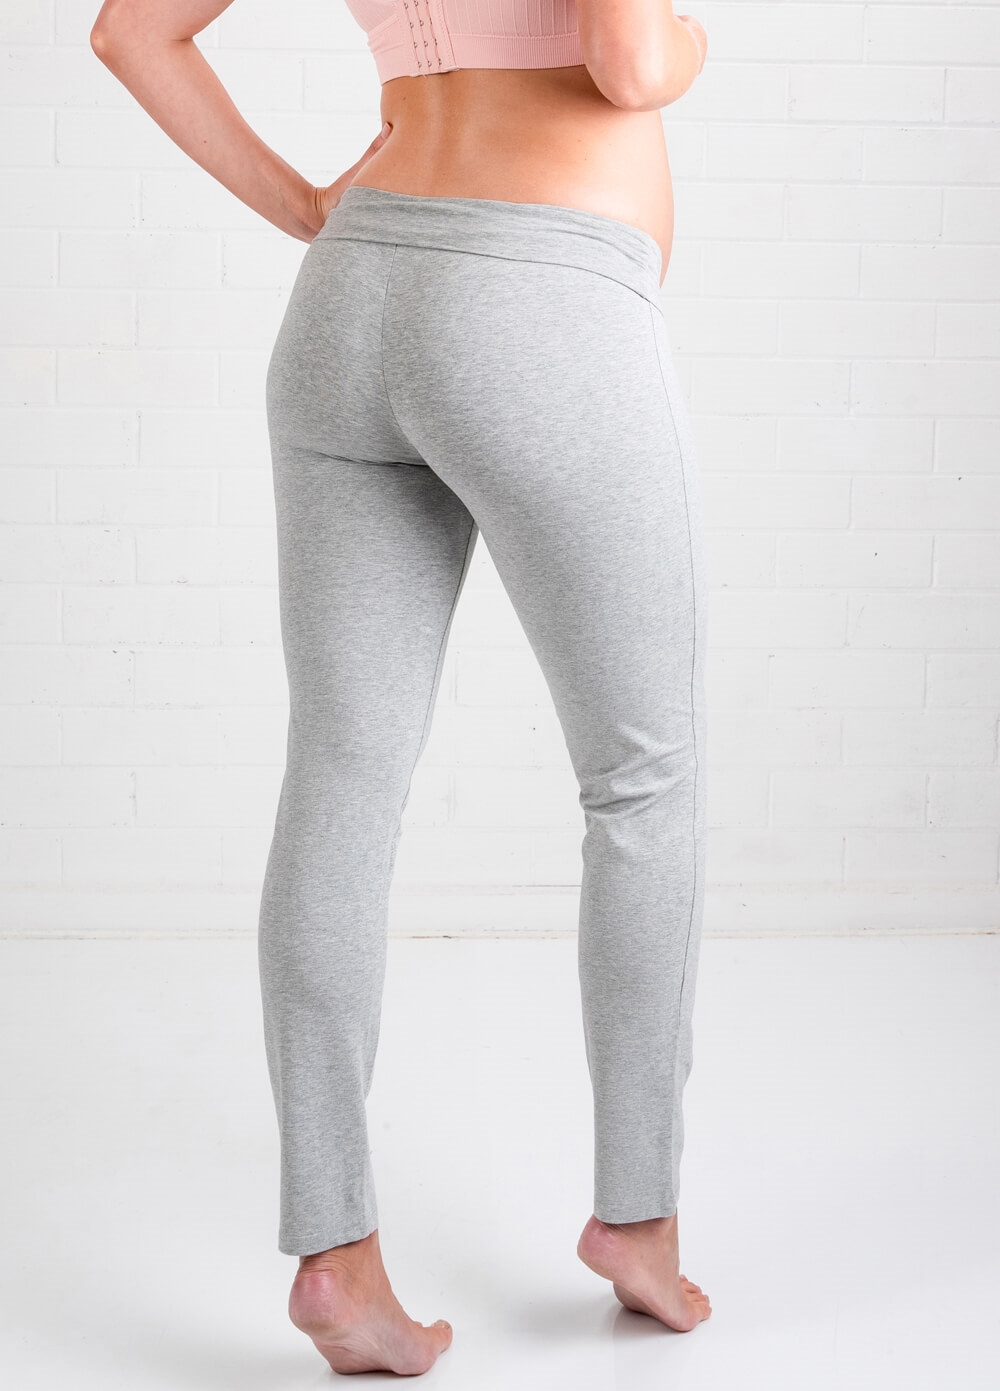 Women Fashion Package Hip Yoga Sports Pants Leggings | Wish